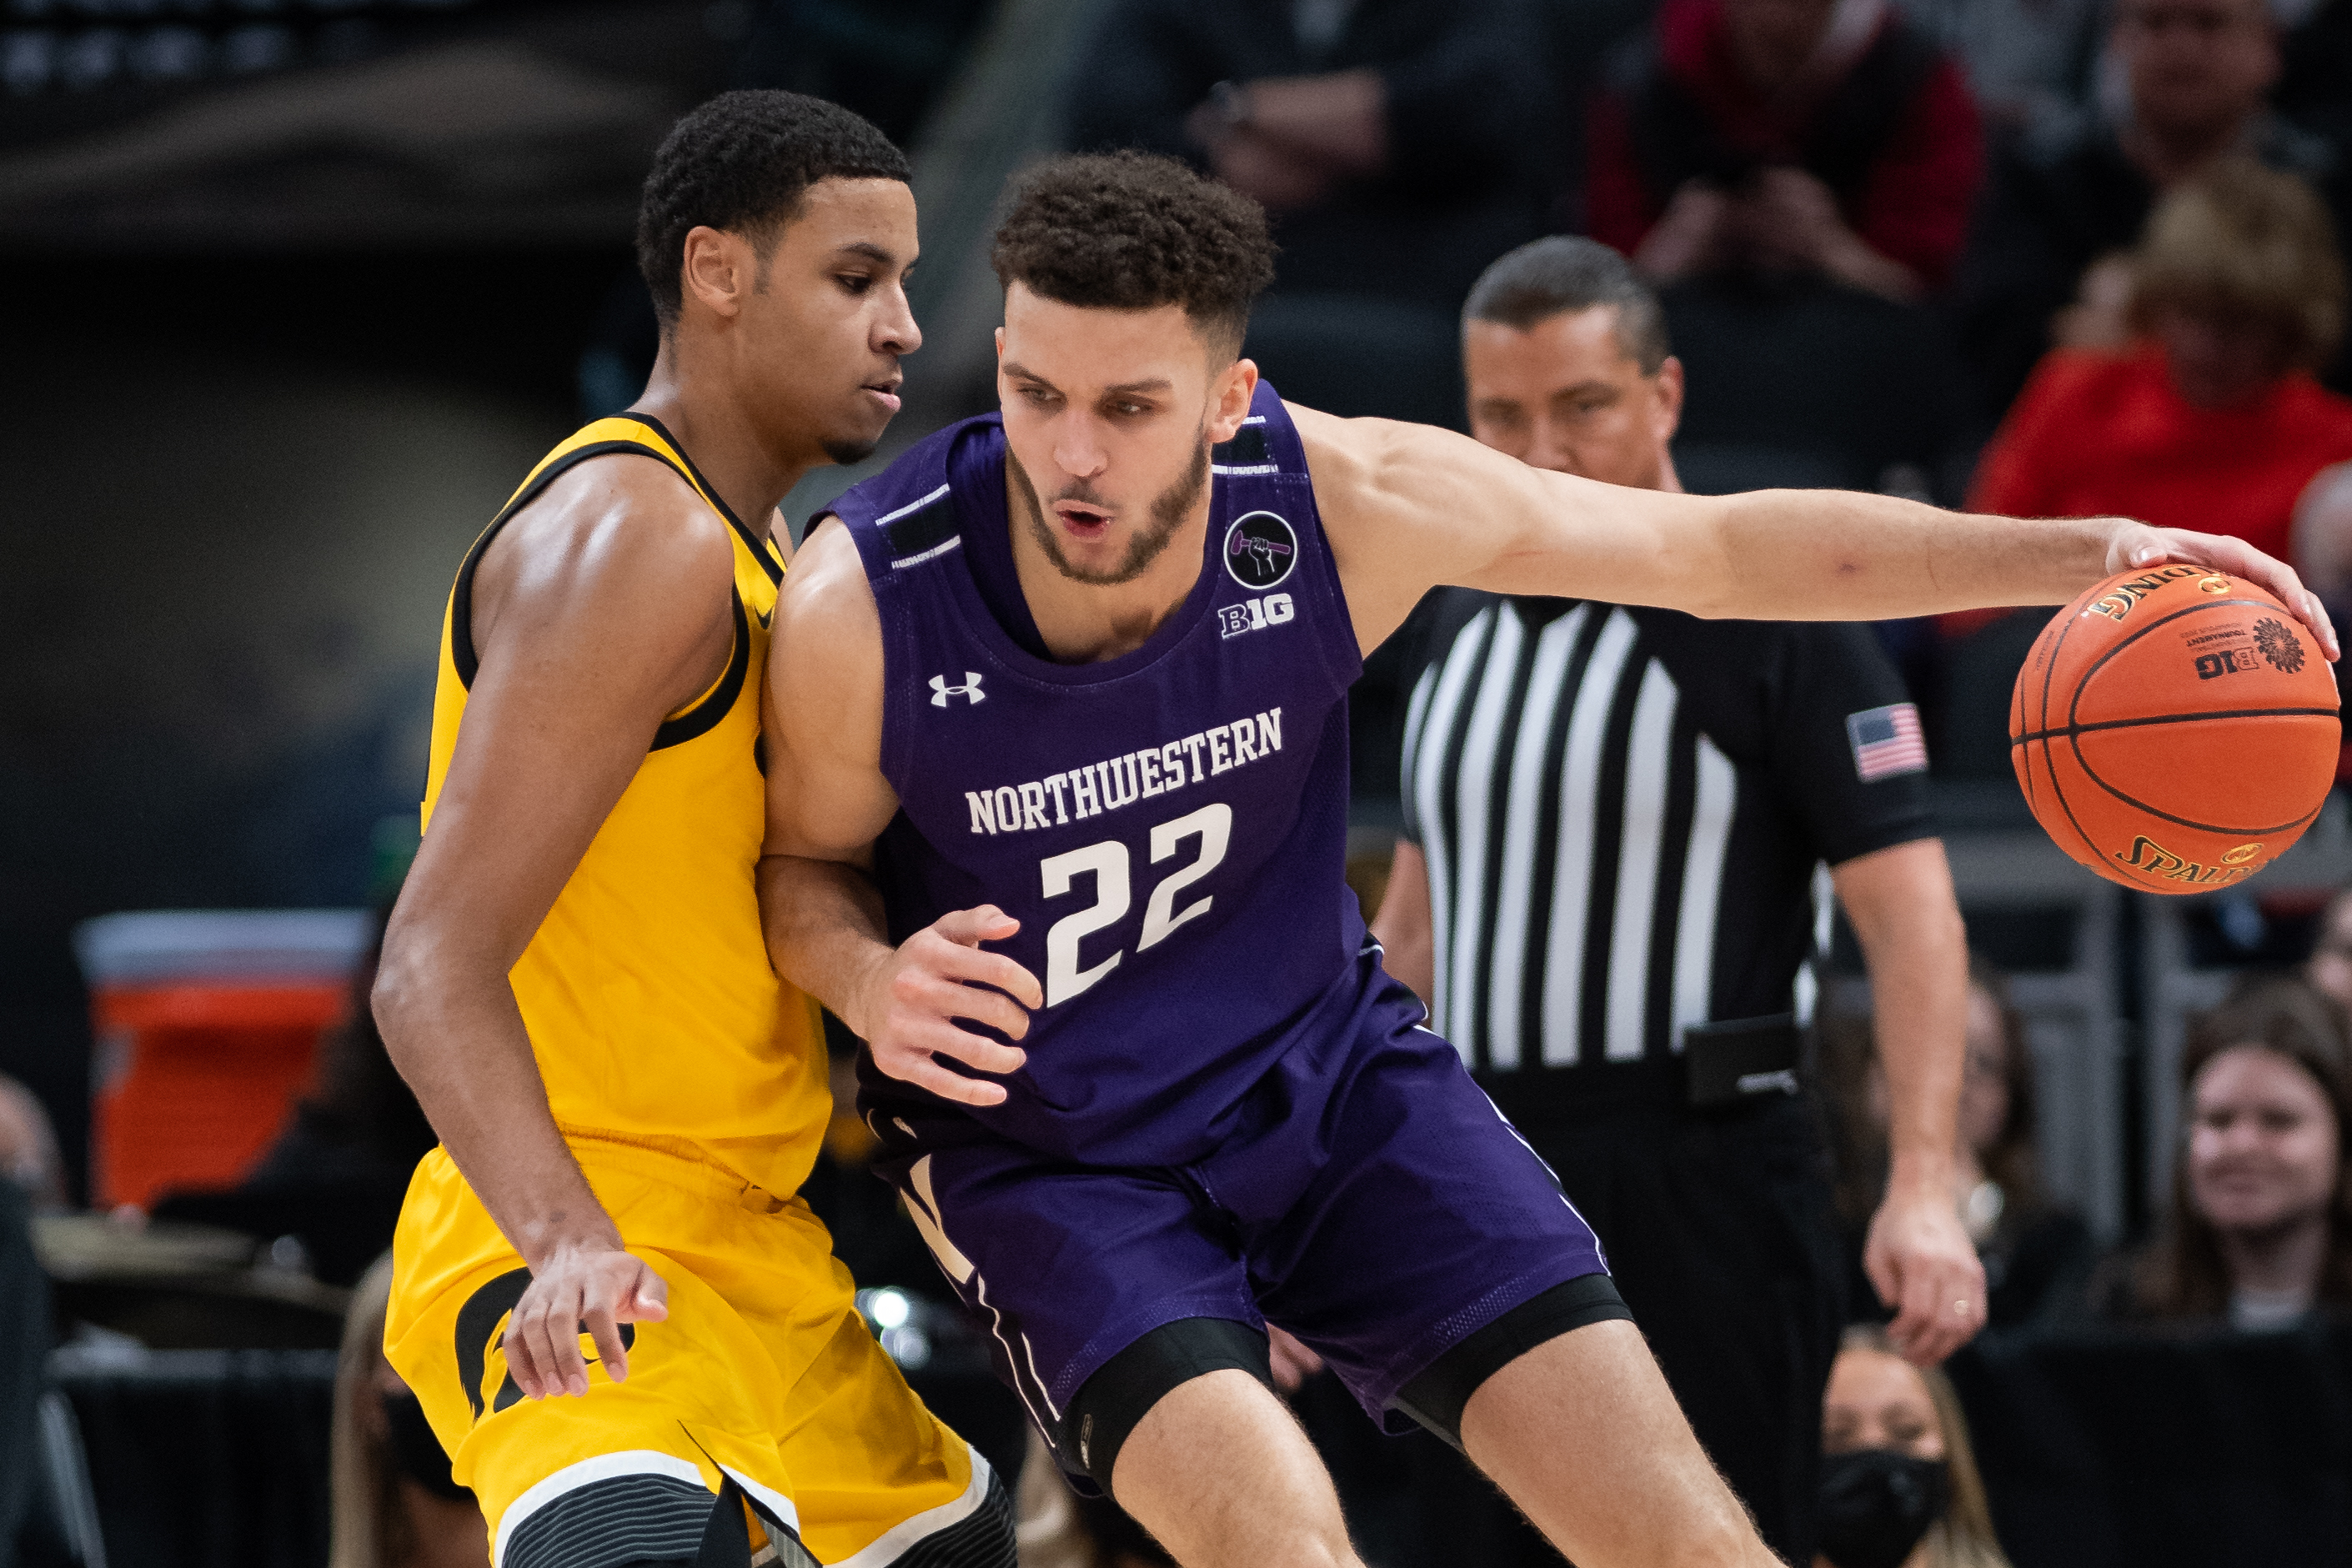 Northwestern men's basketball player previews: Guard, former